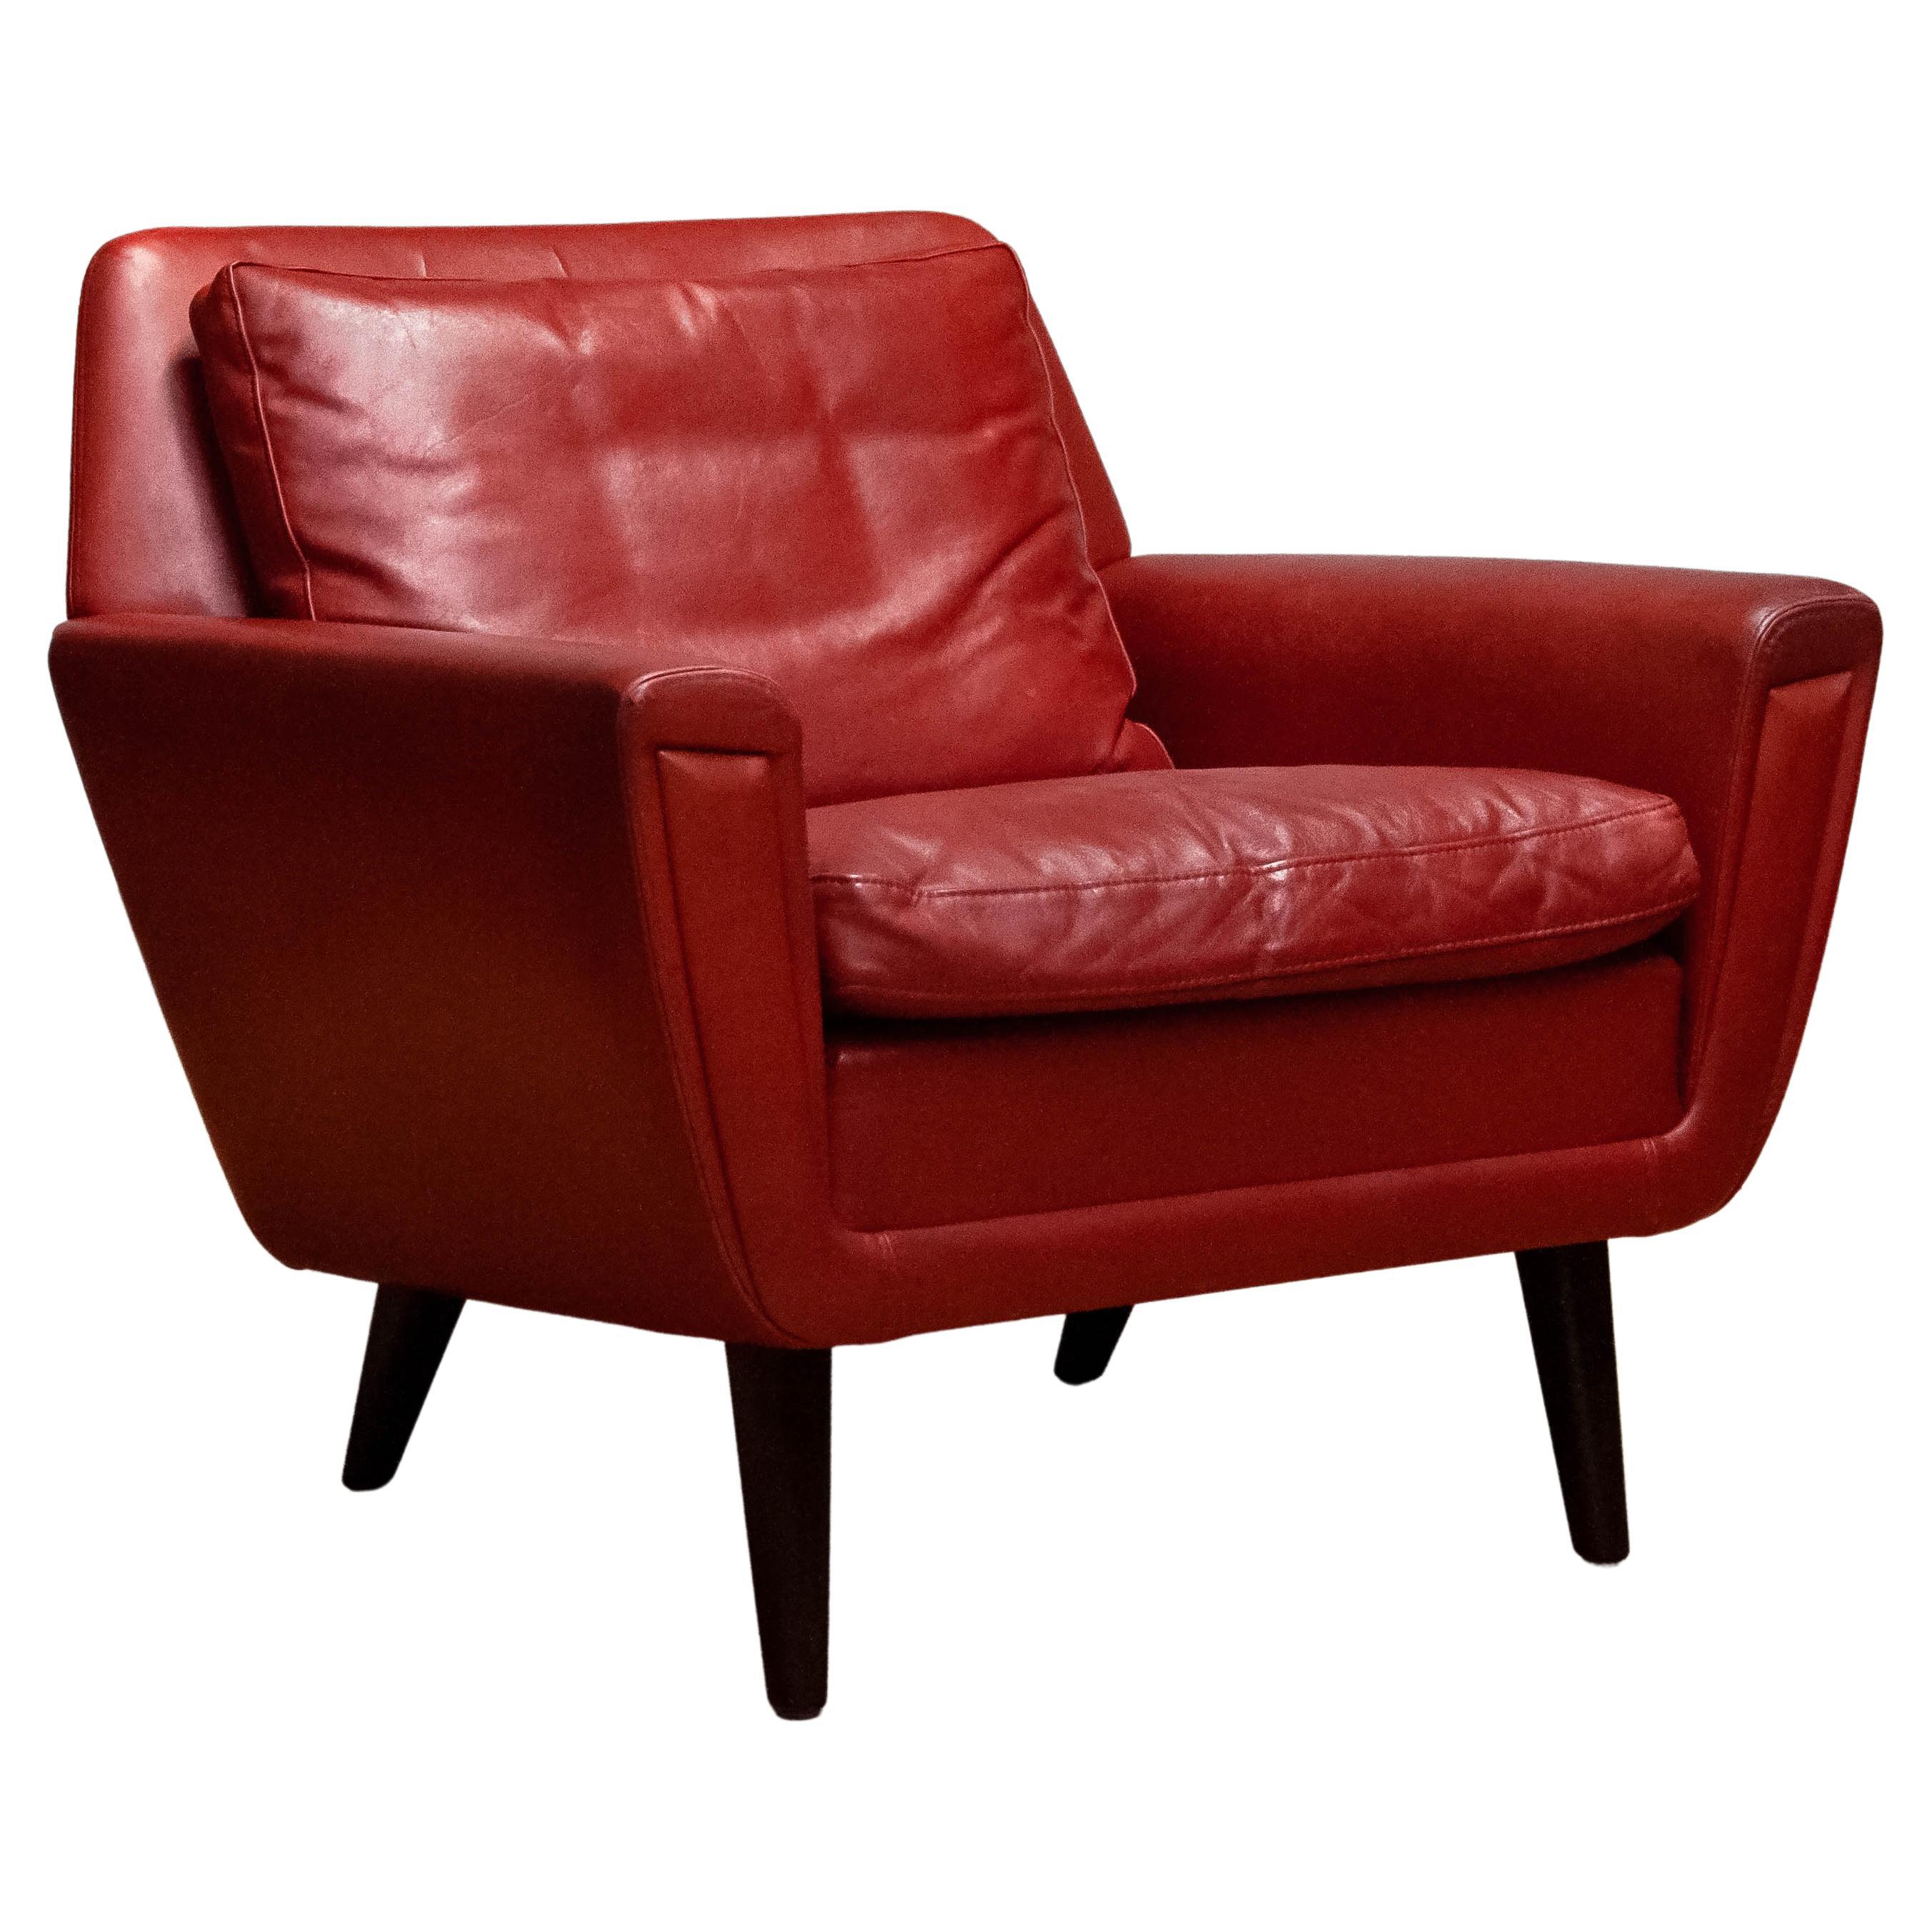 Original dänischer Loungesessel aus rotem Leder, 1960er Jahre 